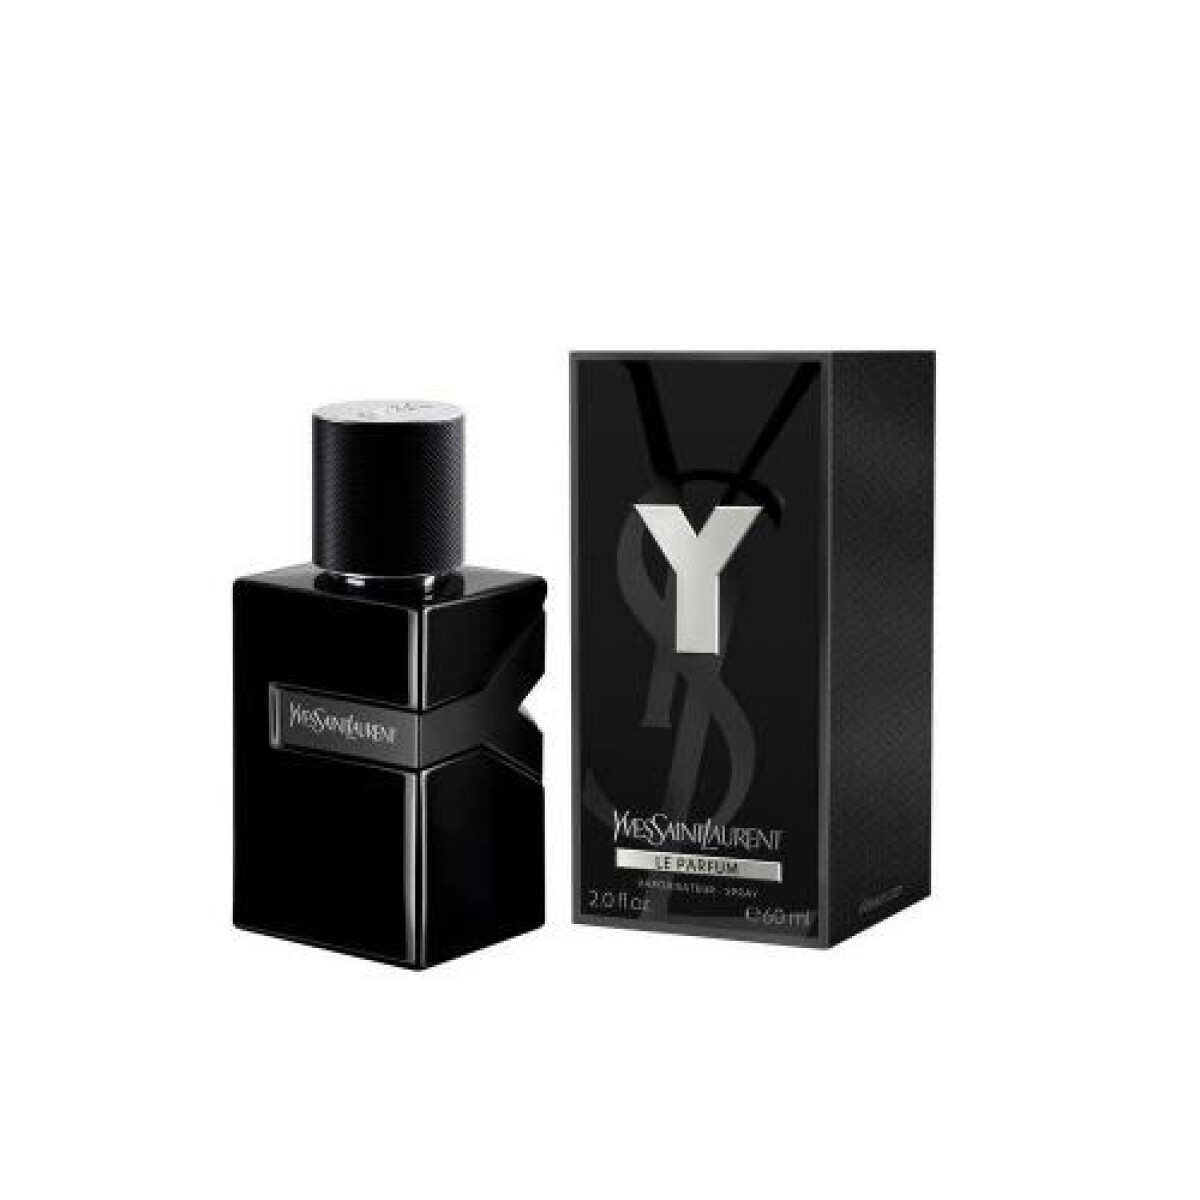 Perfume Ysl Y Le Parfum Edp 60 Ml. 